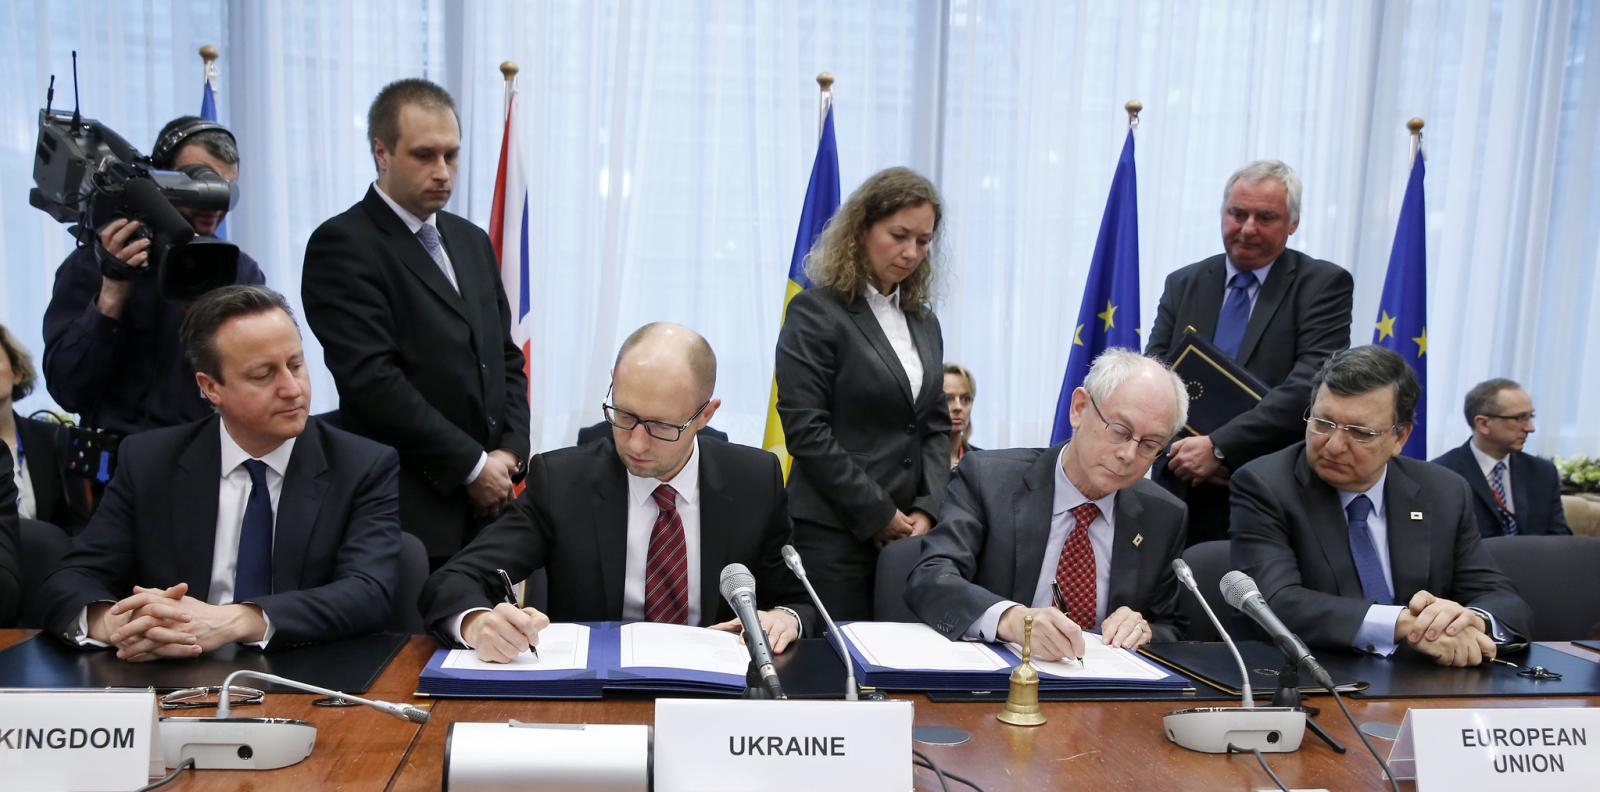 eu-ukr agreement